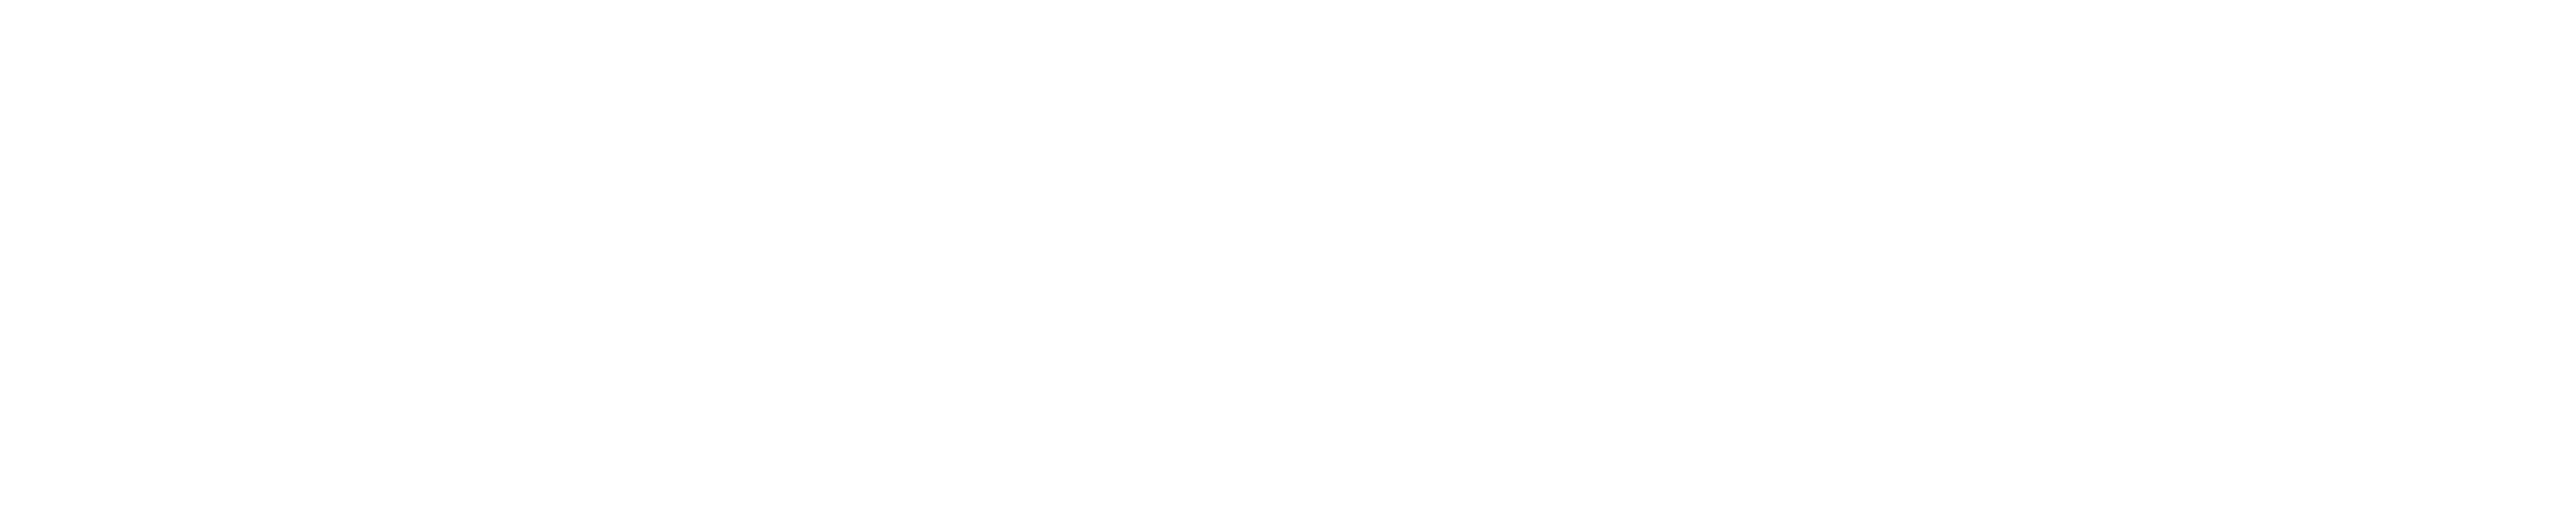 web3auth logo